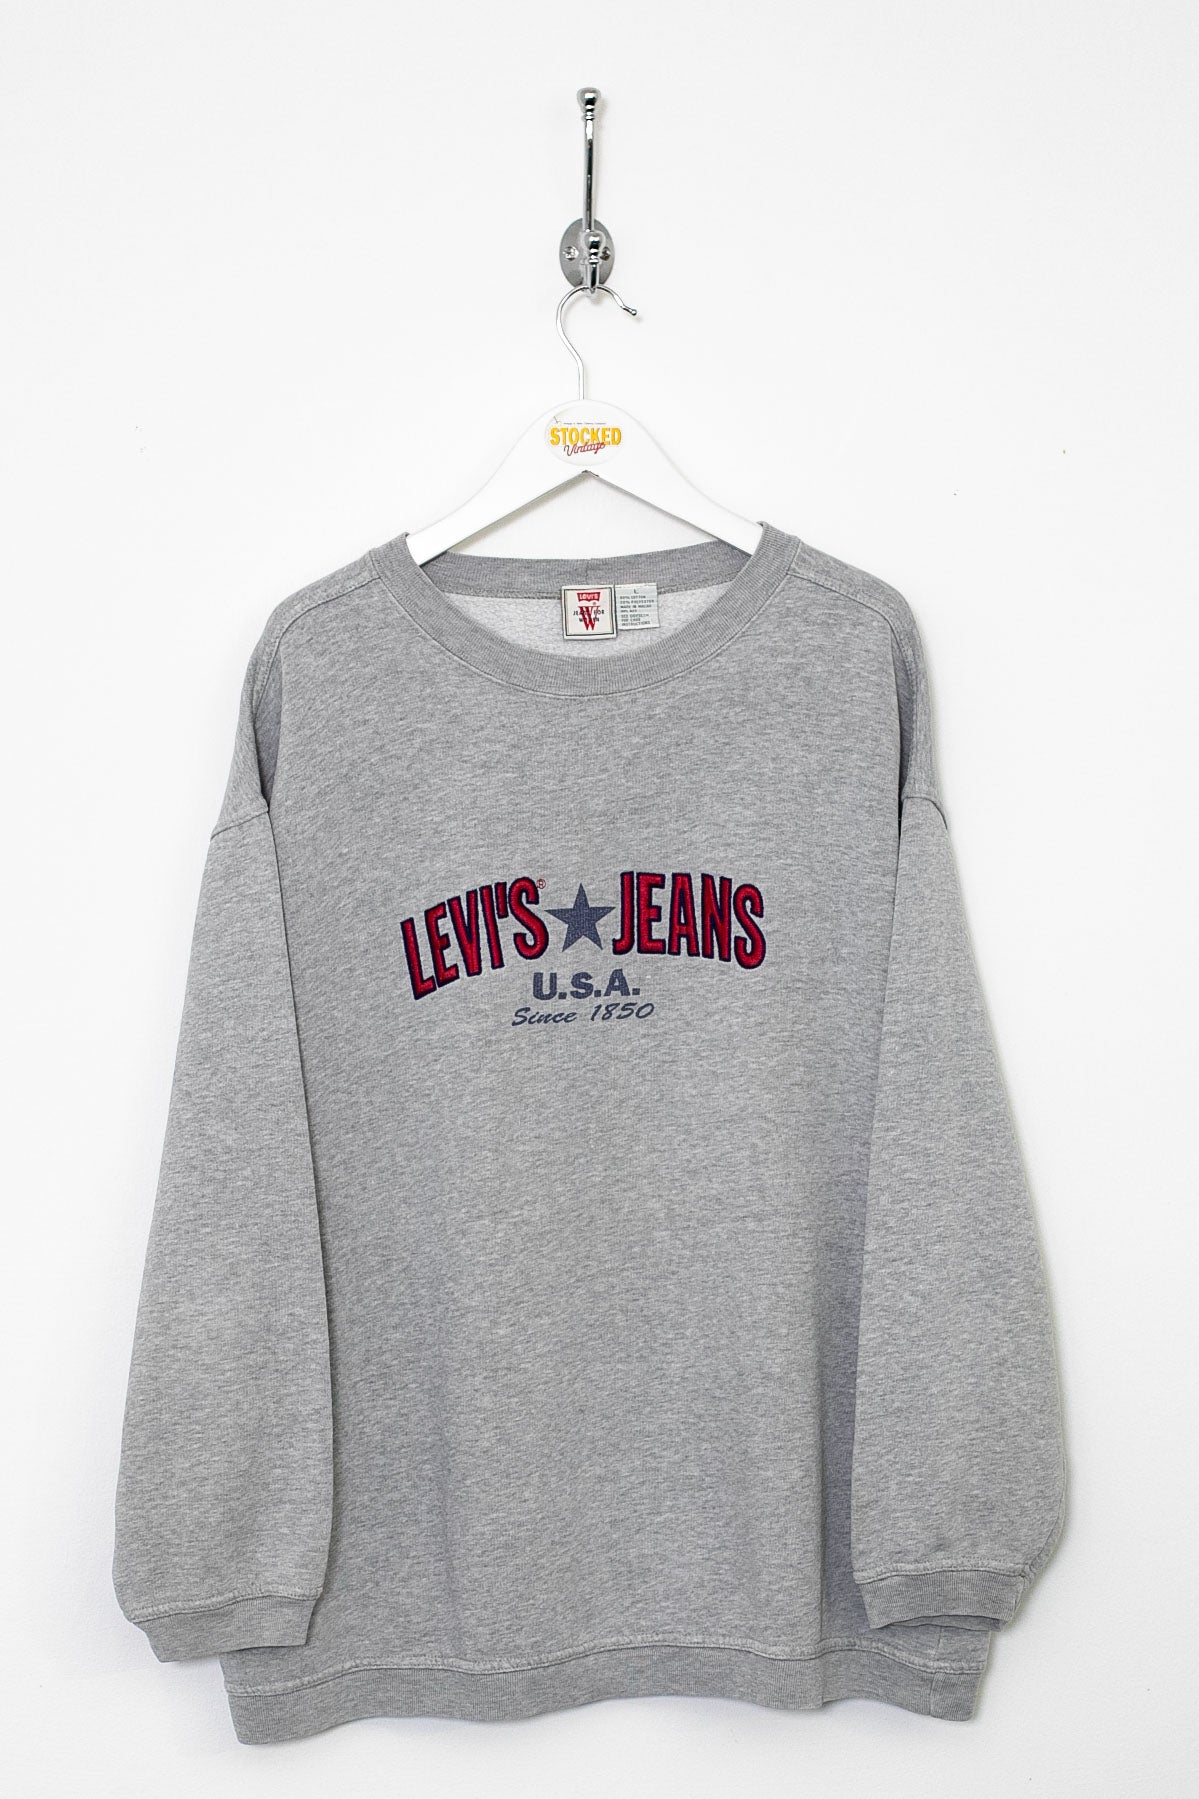 00s Levi's Sweatshirt (L)